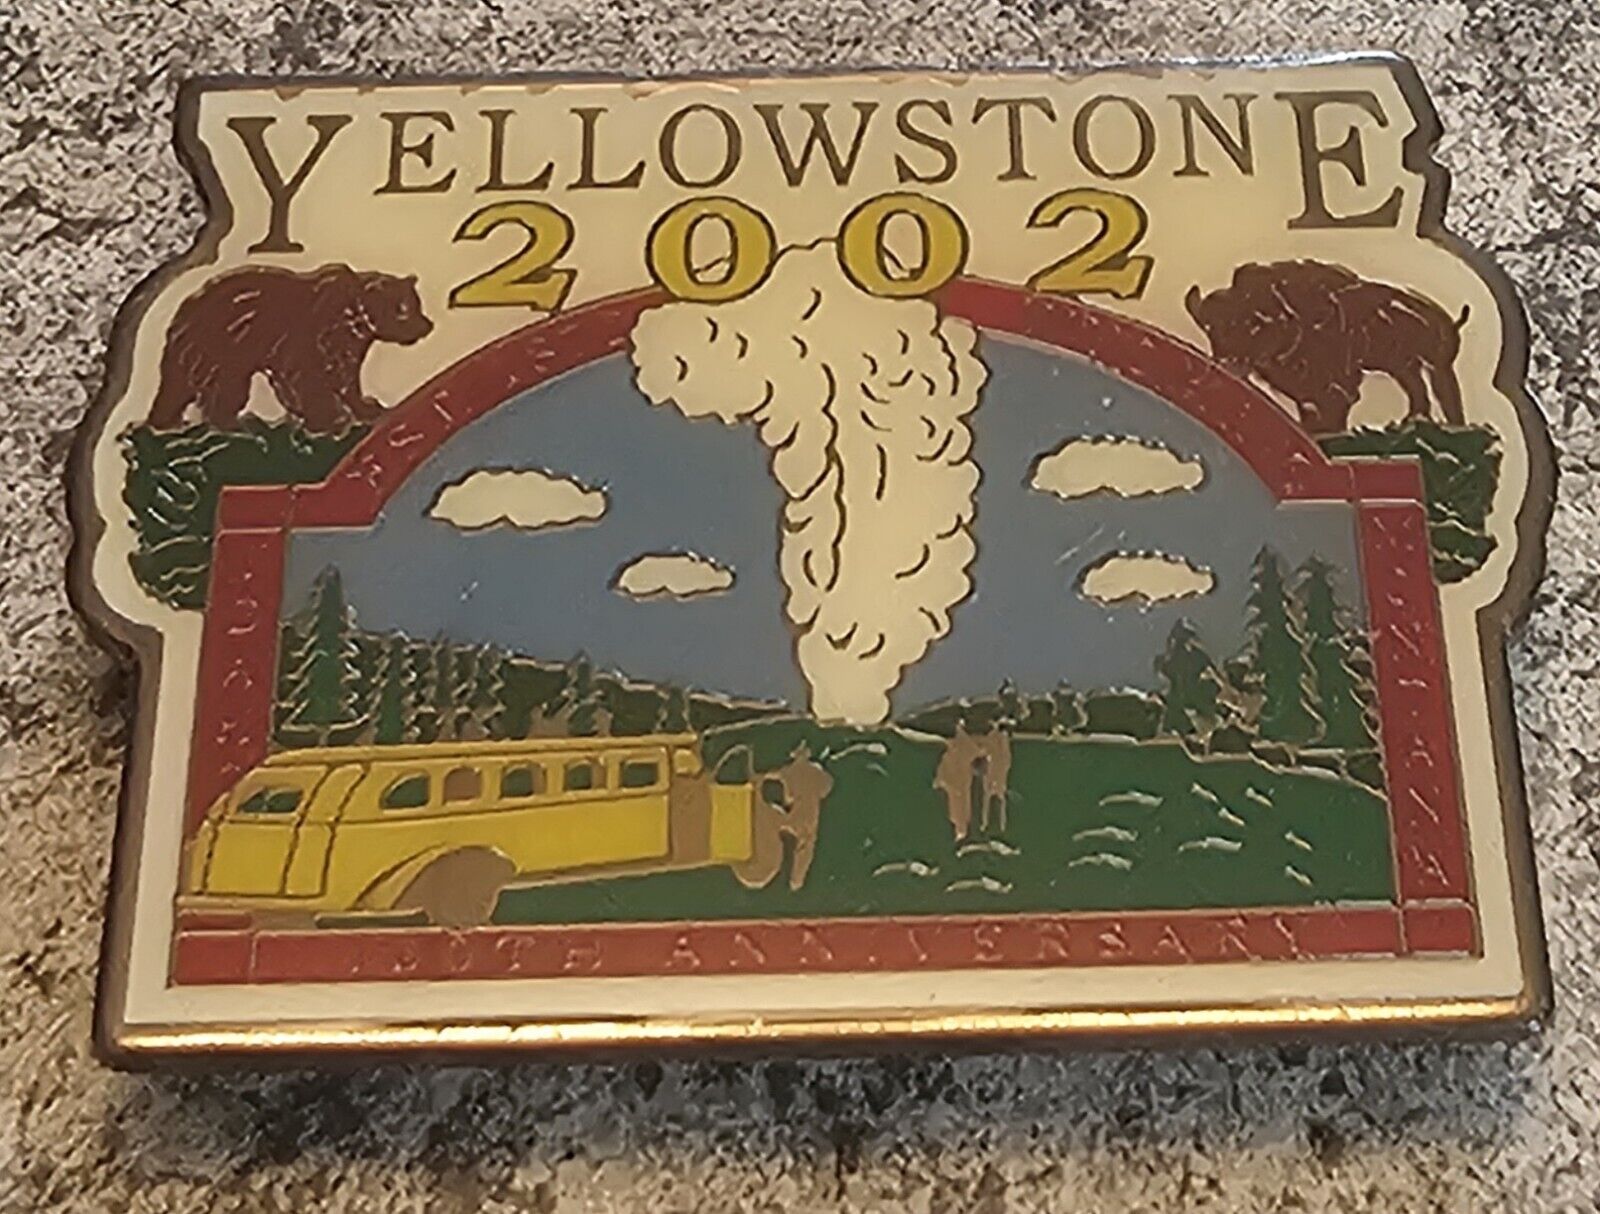 Yellowstone Park Refrigerator Magnet 2002 130th Anniversary Bus Geyser